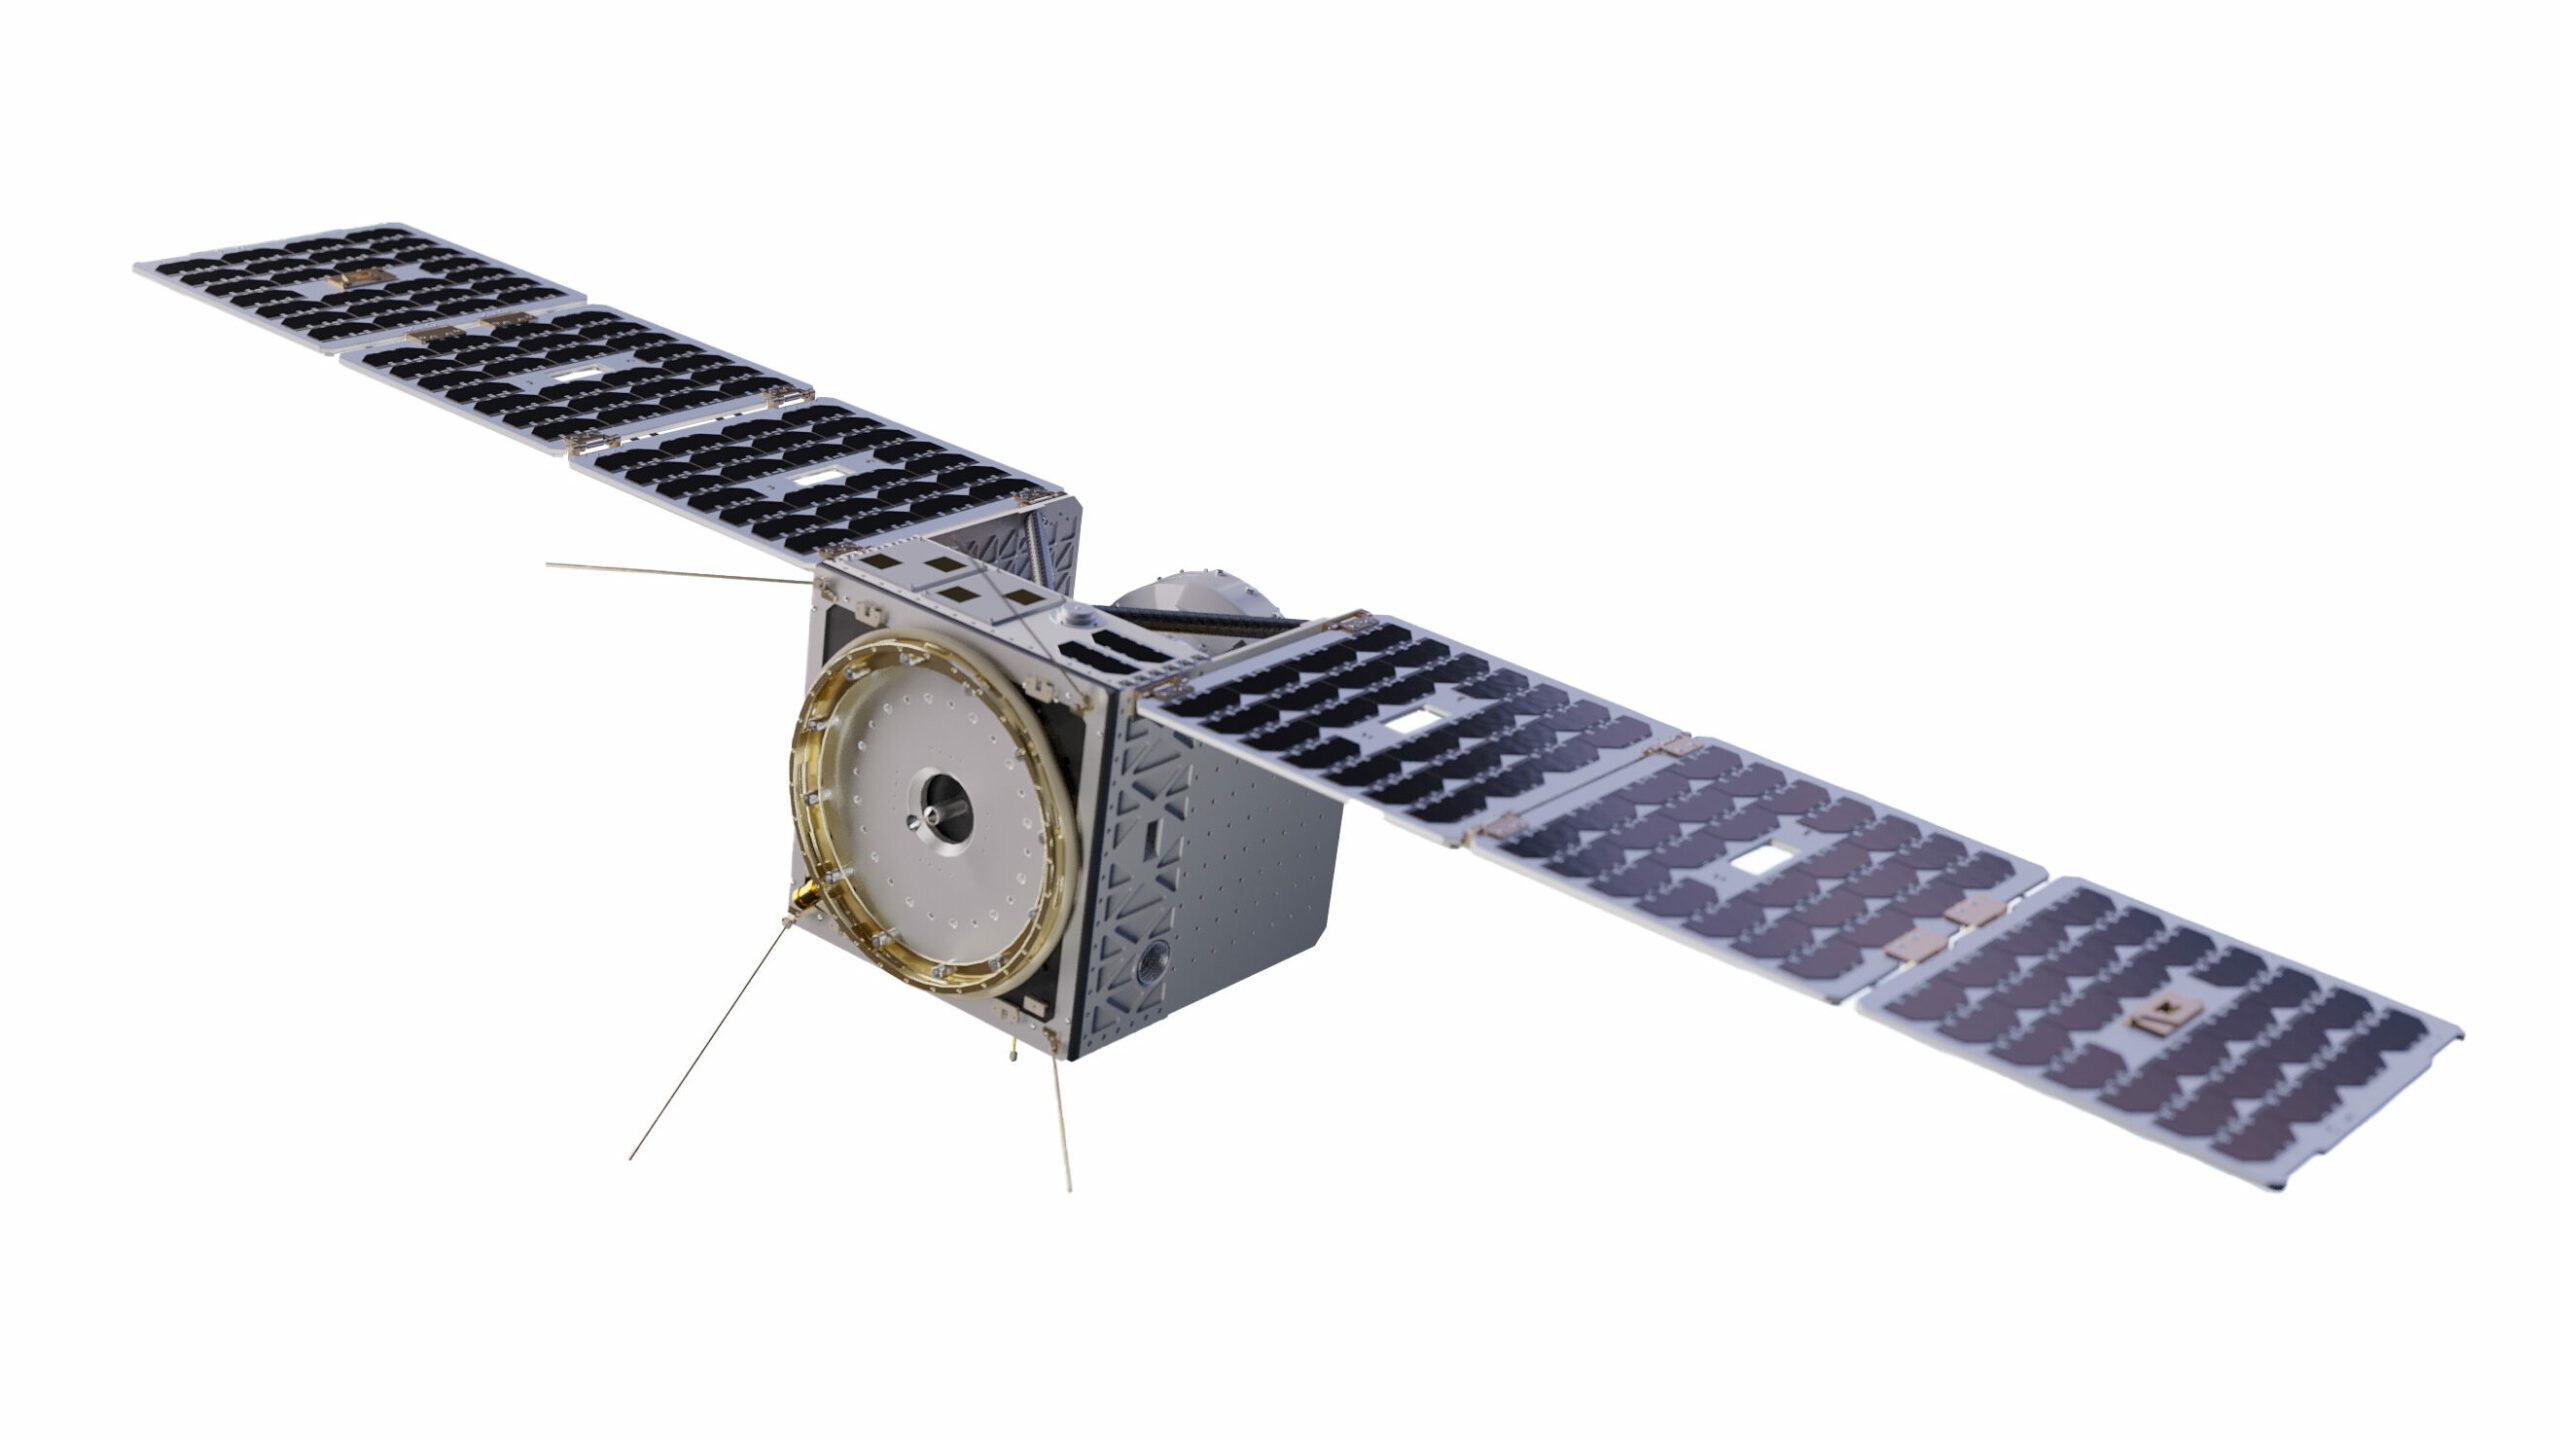 constellr relies on Microsatellite Bus MP 42 from NanoAvionics for HiVE, image © NanoAvionics